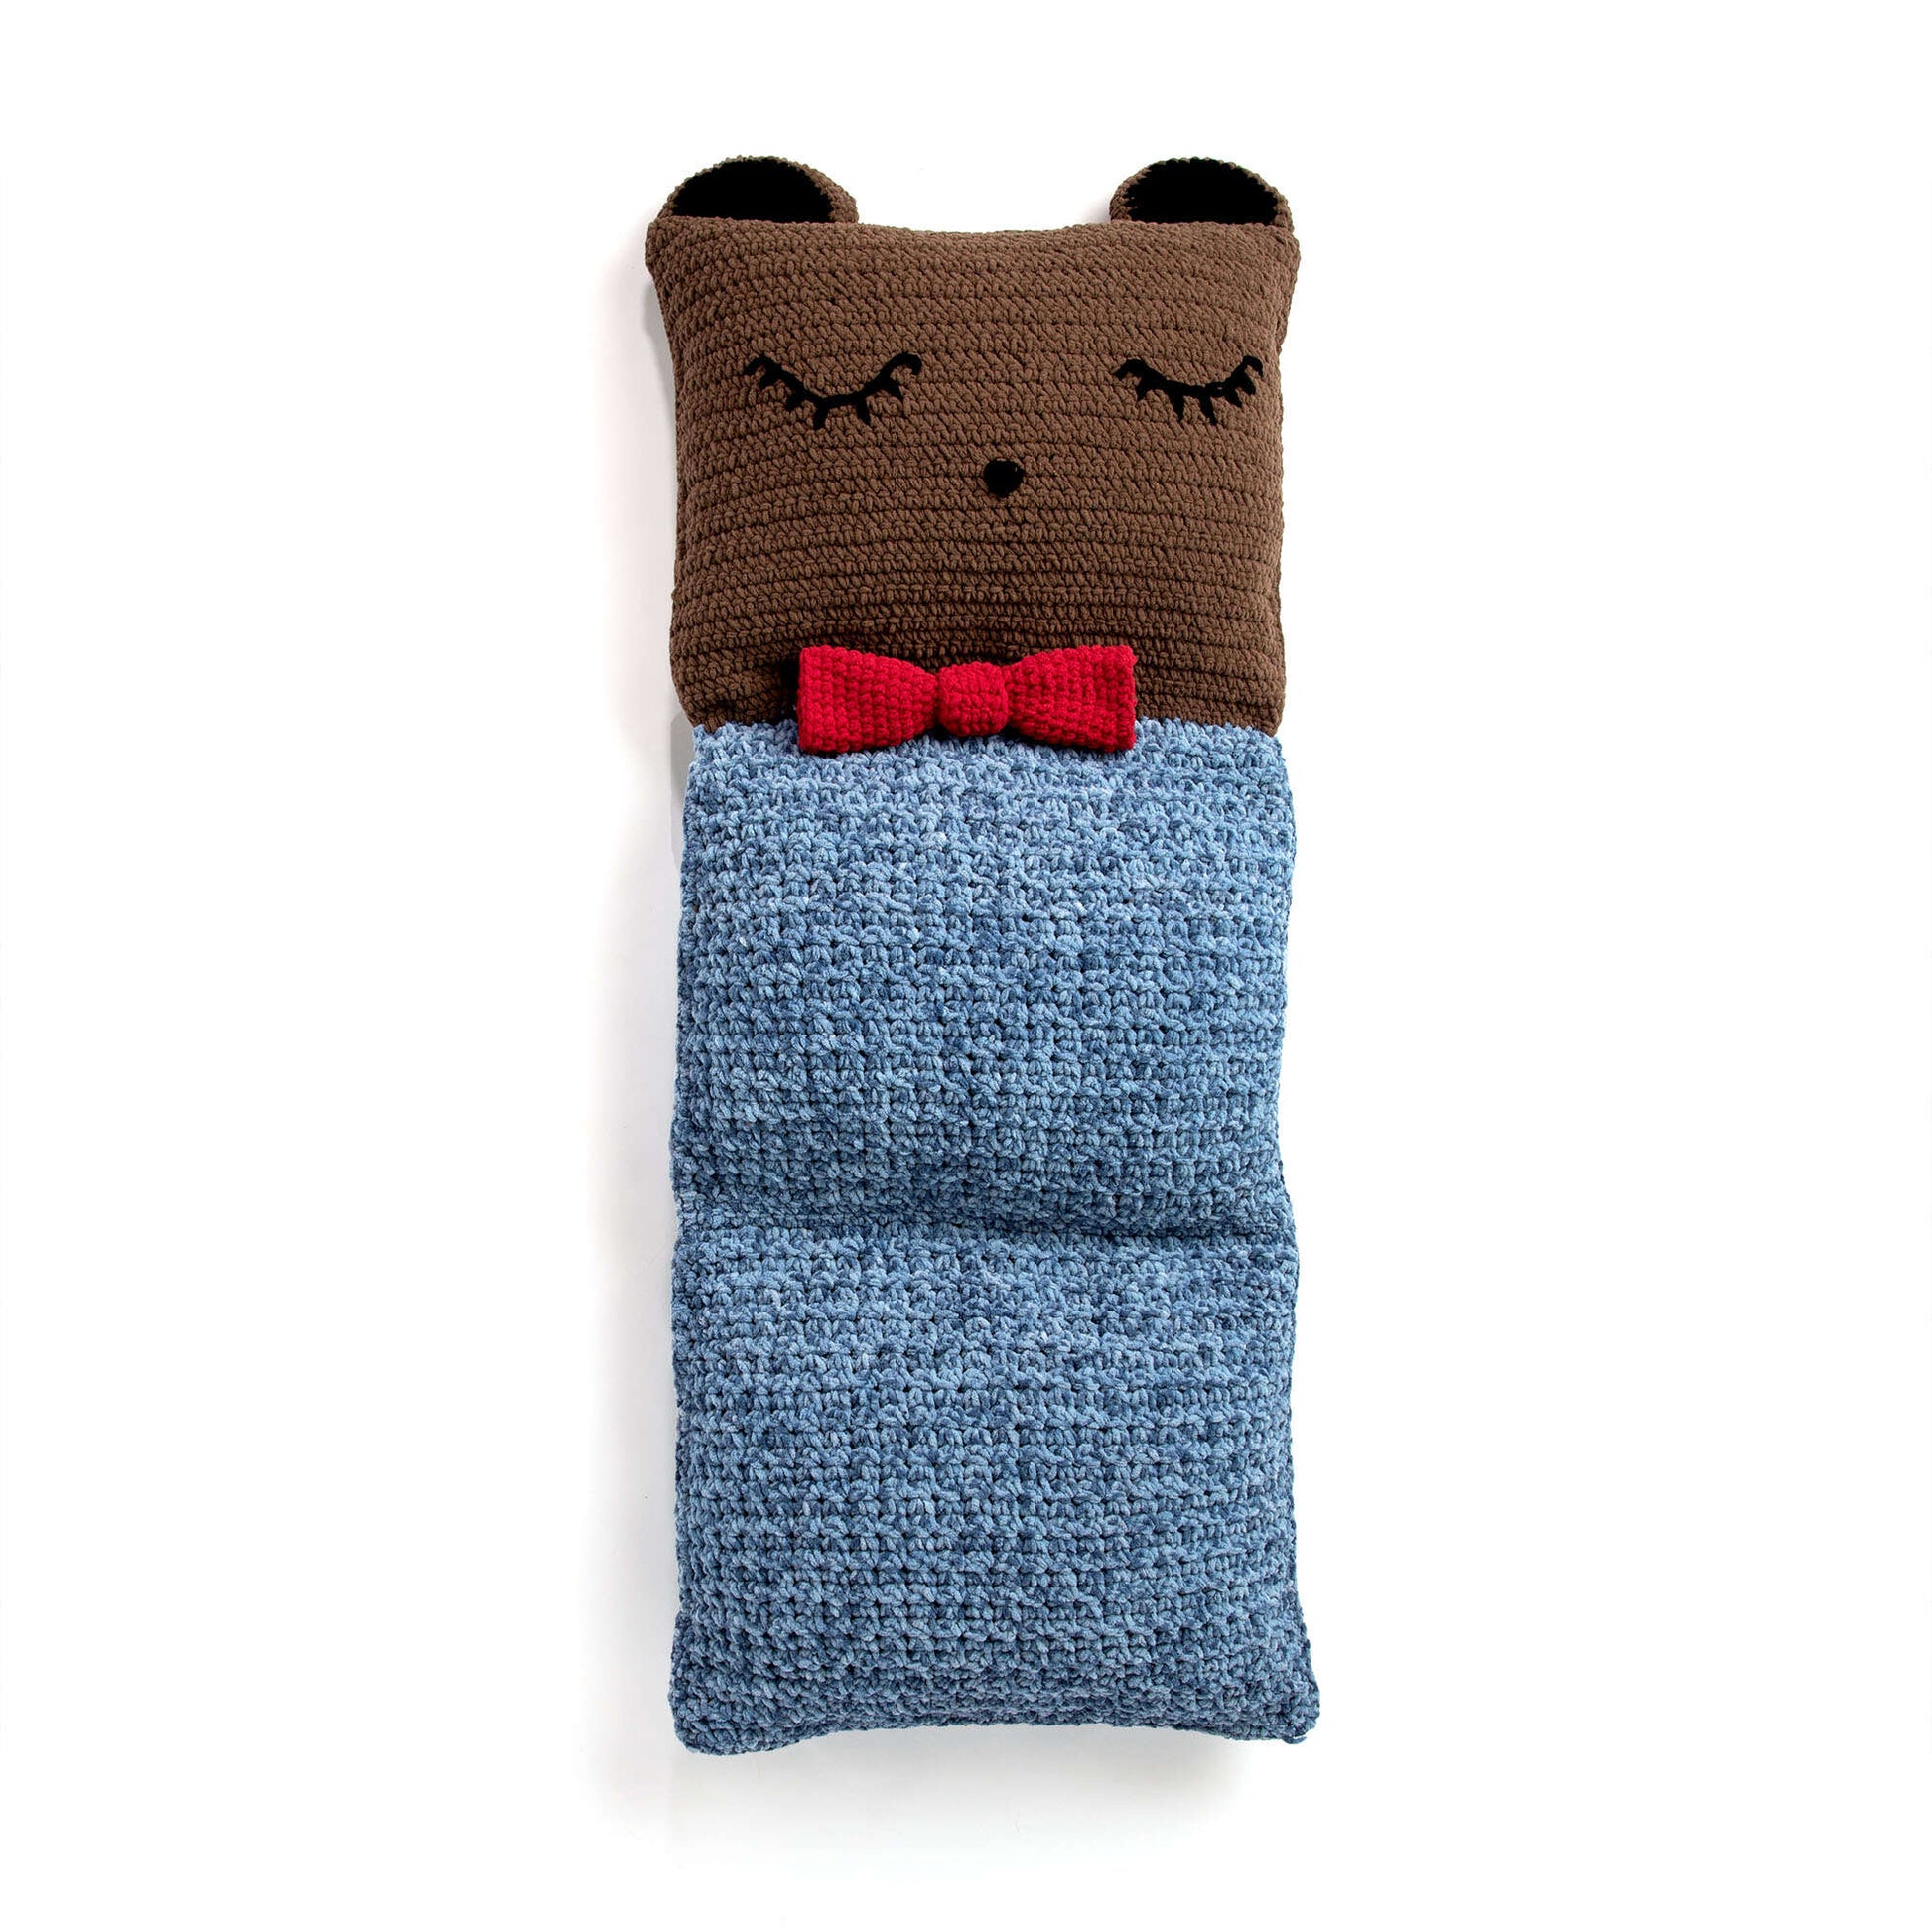 Free Bernat Bear-y Comfy Crochet Floor Pillow Pattern